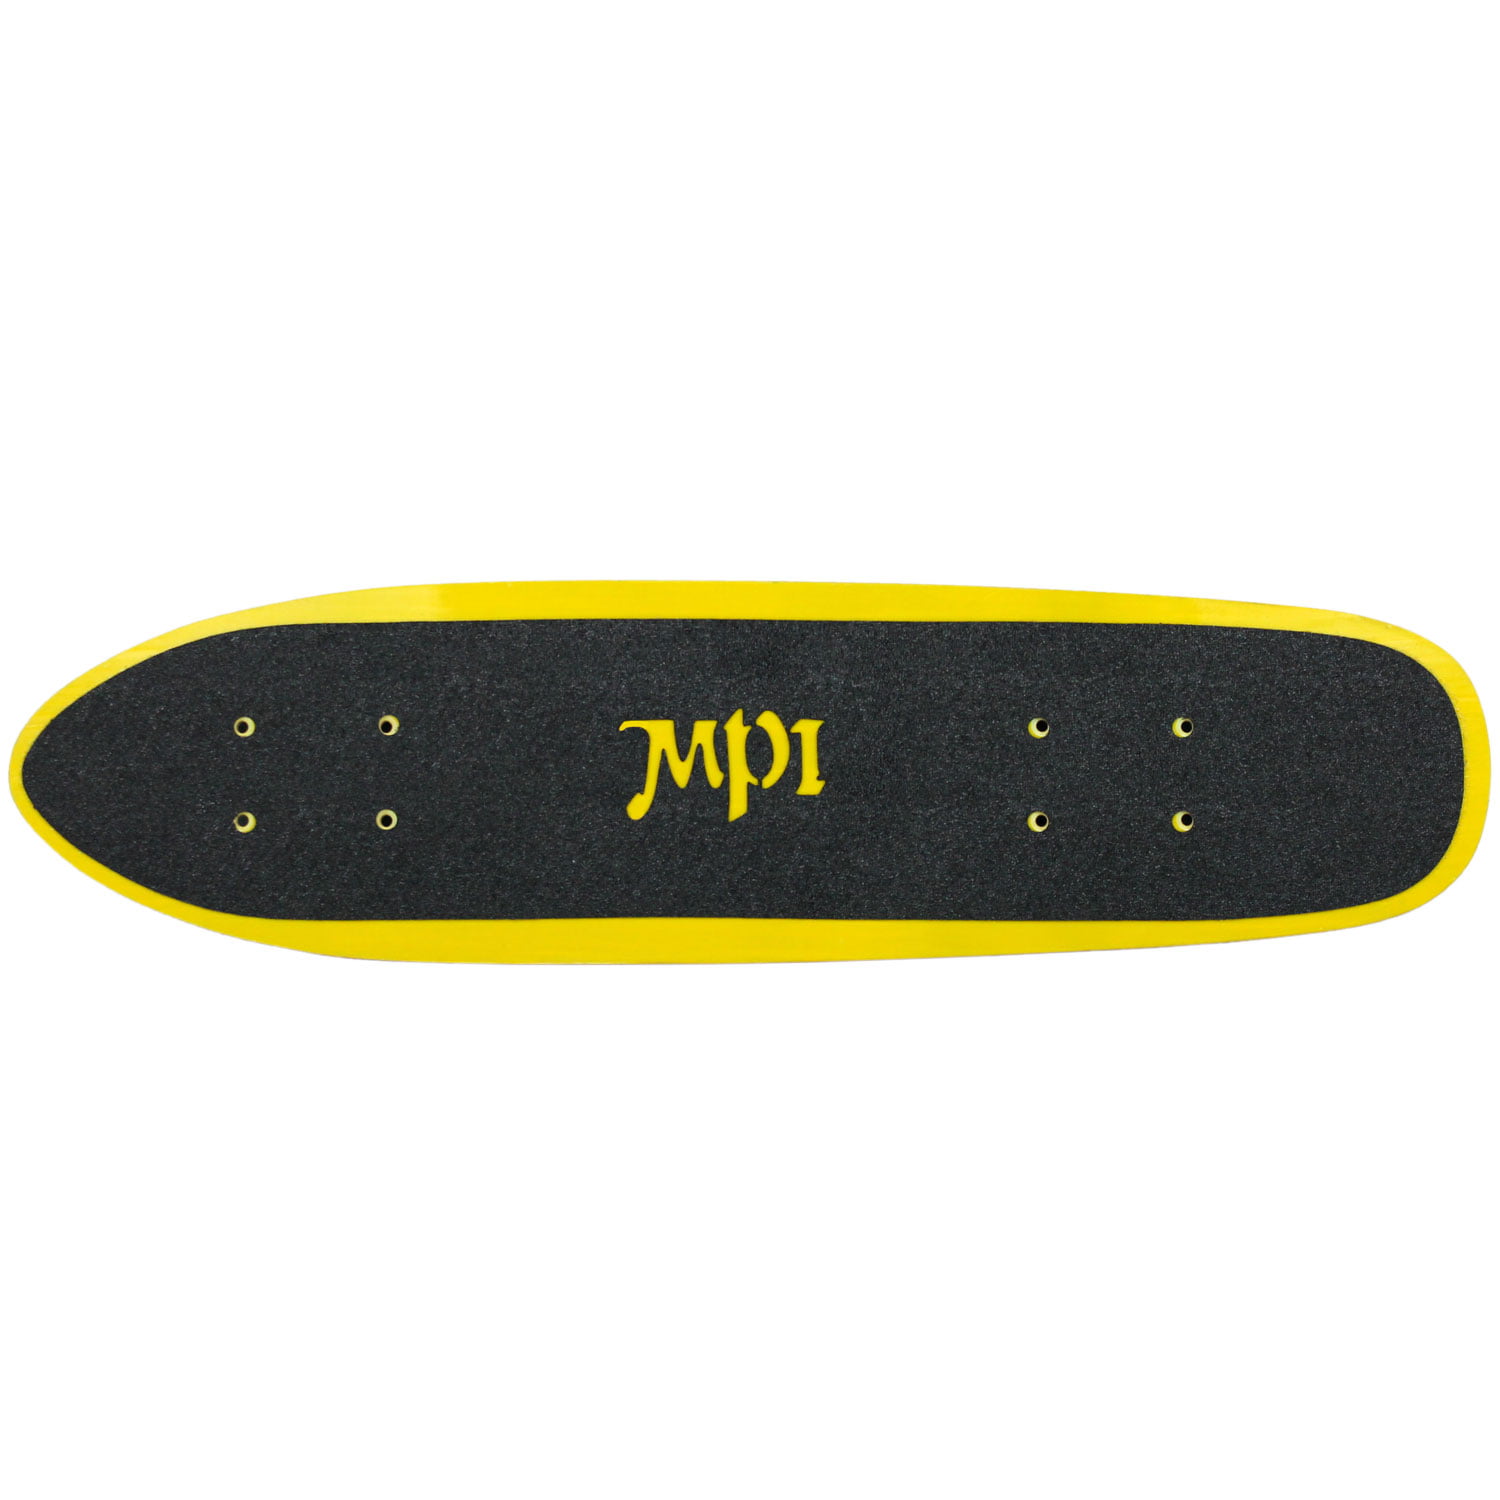 MPI NOS Mahagoni Skateboard Deck